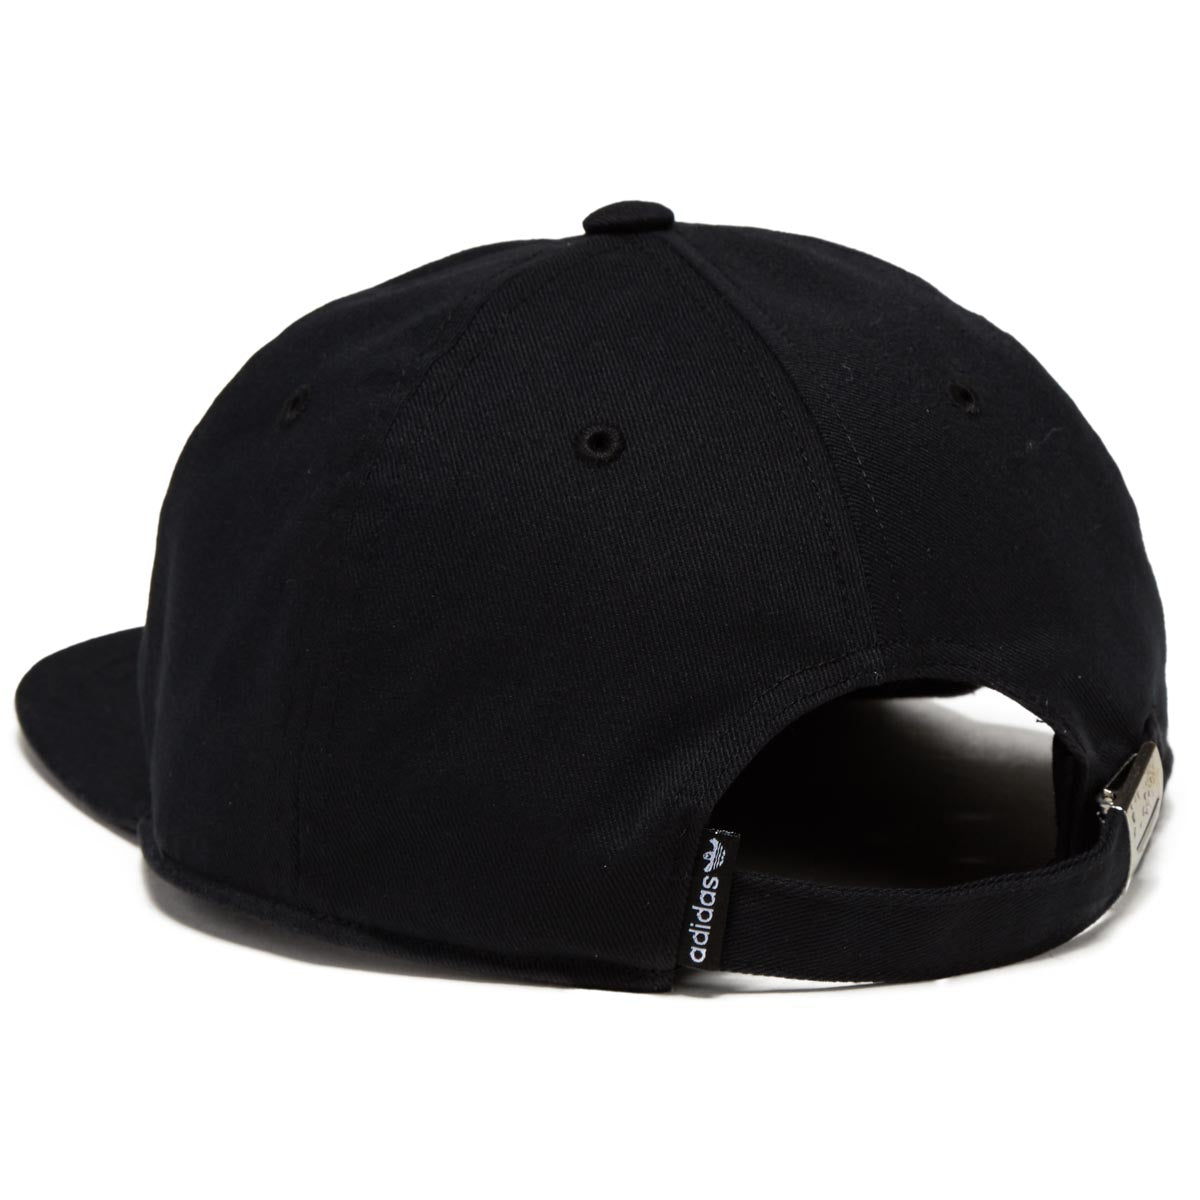 Adidas Shmoo Hat - Black image 2